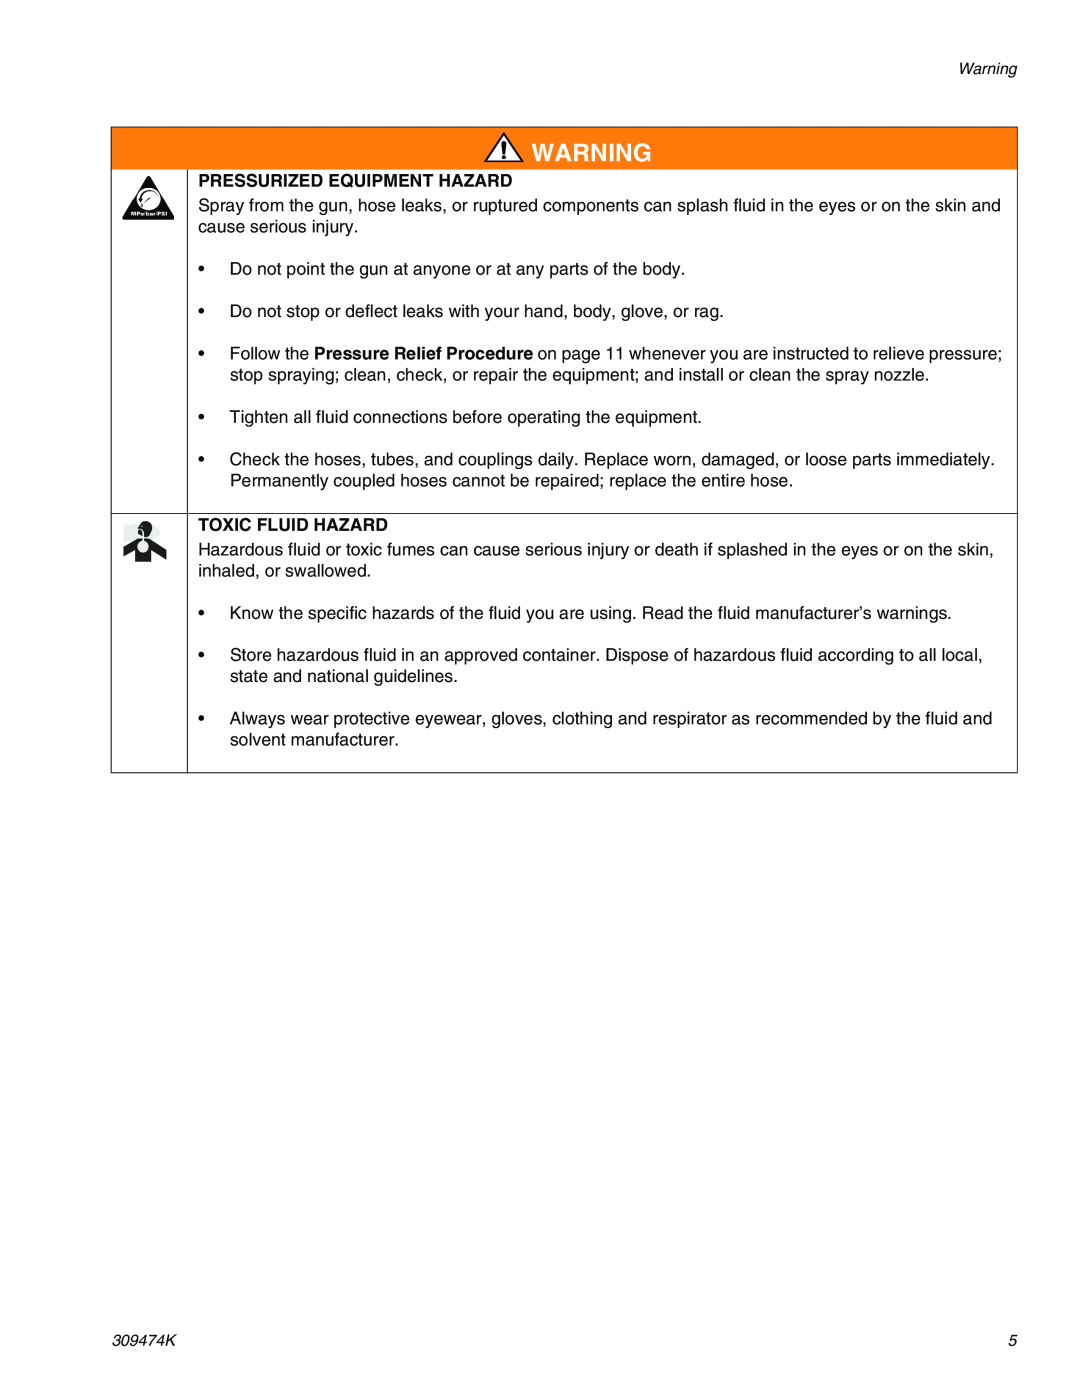 Graco Inc 233757 important safety instructions Pressurized Equipment Hazard, Toxic Fluid Hazard, 309474K 